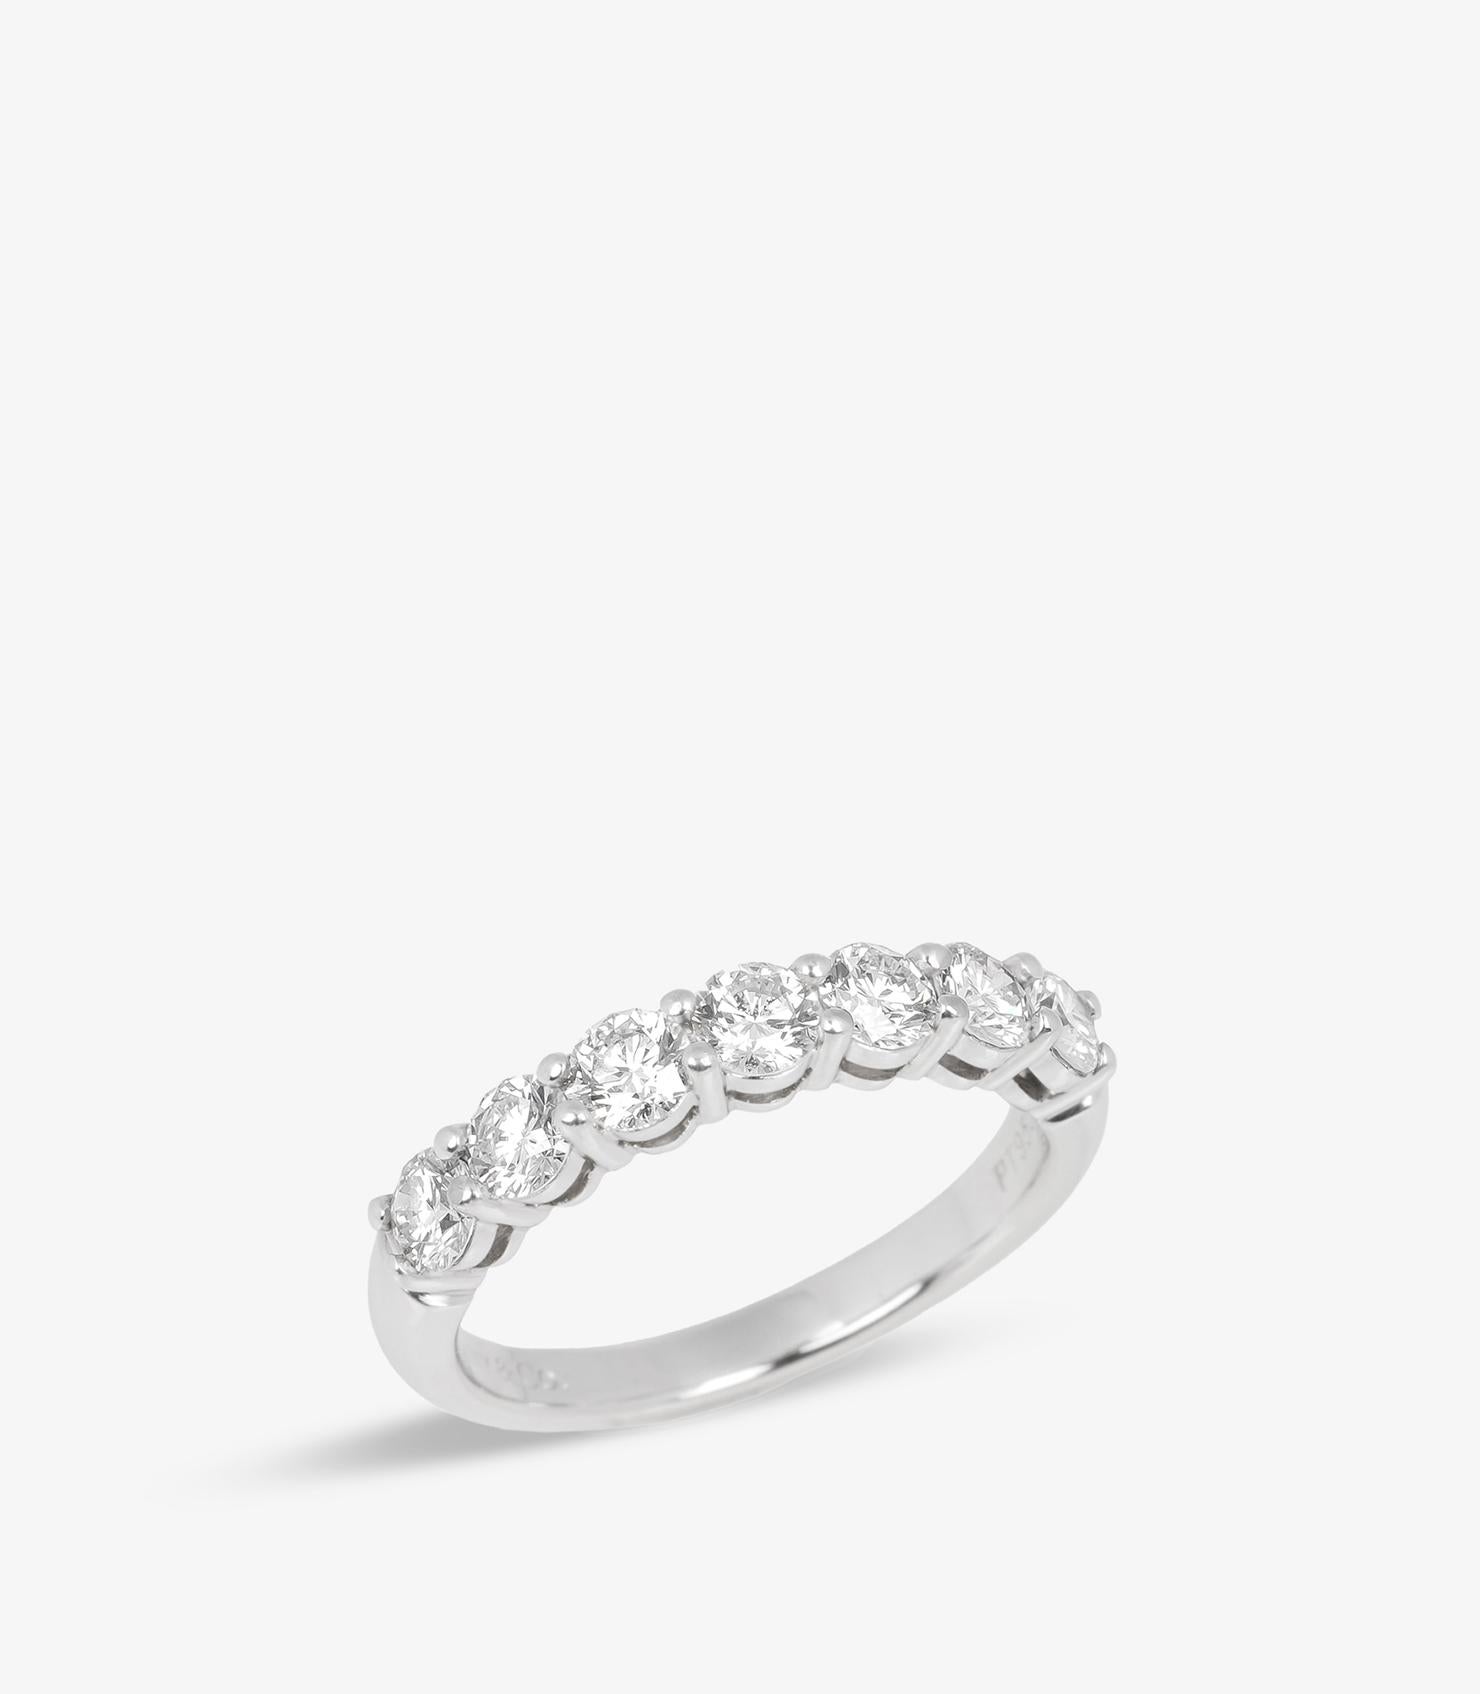 Tiffany & Co. 0,91ct Brillantschliff Diamant Platin Ewigkeitsring

Marke - Tiffany & Co.
Modell- Halber Ewigkeitsring
Produkttyp- Ring
Begleitet von - Tiffany & Co. Box
MATERIAL(e)- Platin
Edelstein-Diamant
UK Ringgröße- L 1/2
EU-Ringgröße - 52
US